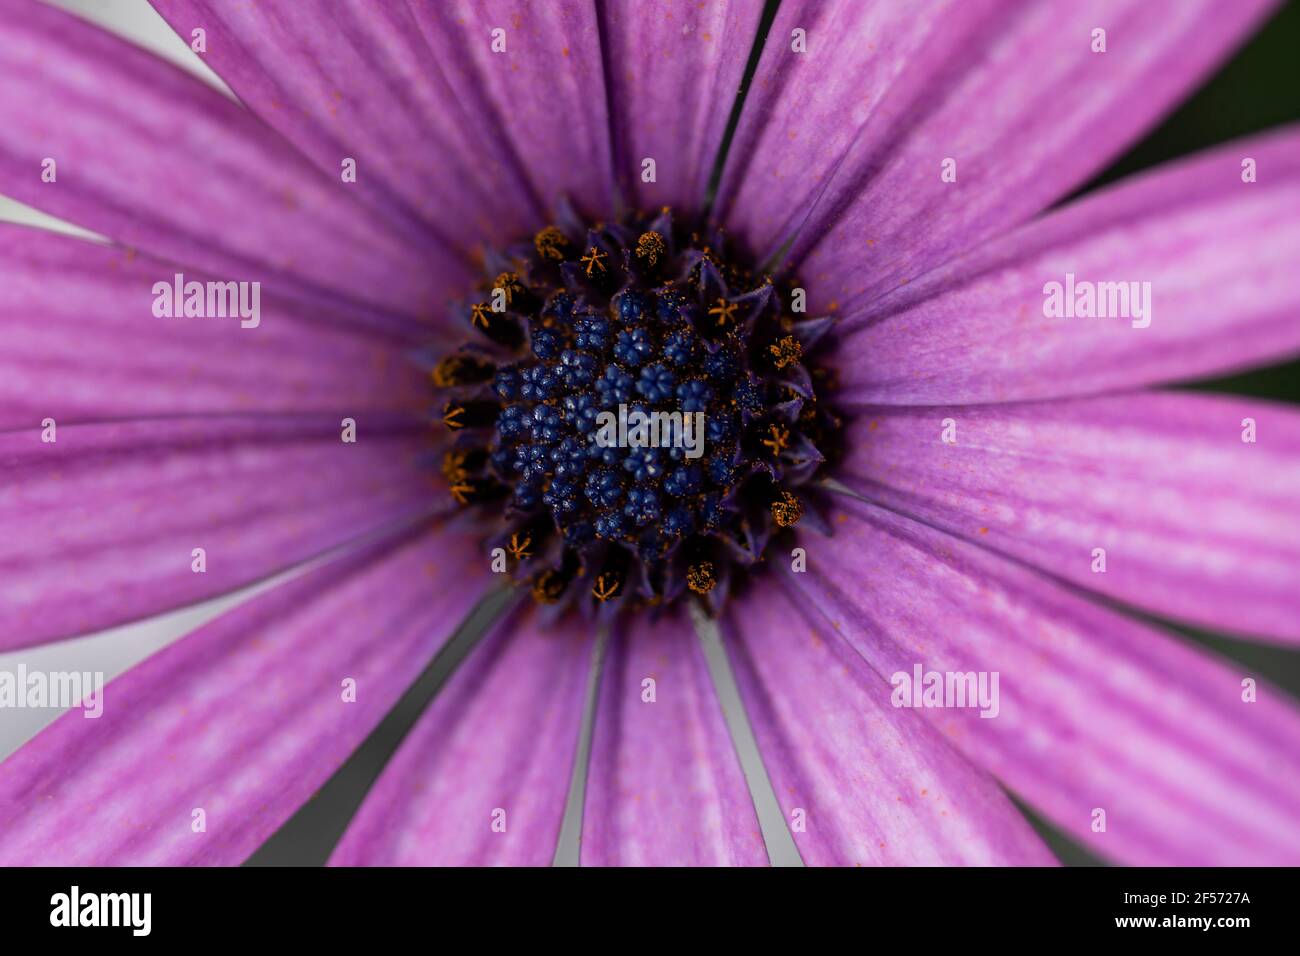 macro photography of purple daisy.close-up aerial photograph. Horizontal photograph Stock Photo